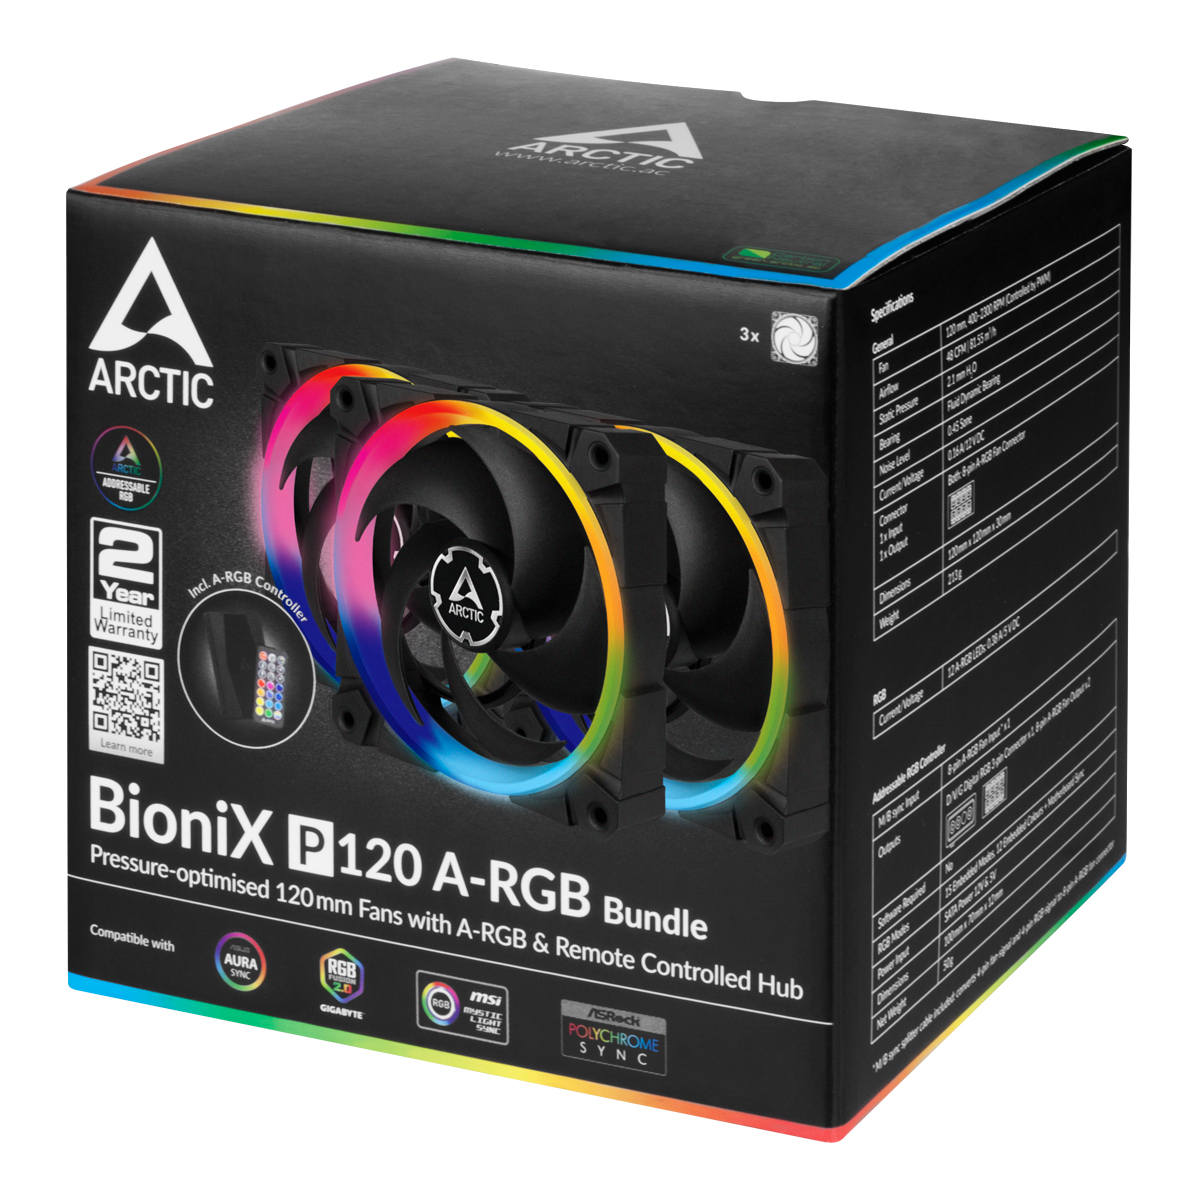 bionix-p120-argb-bundle-g06